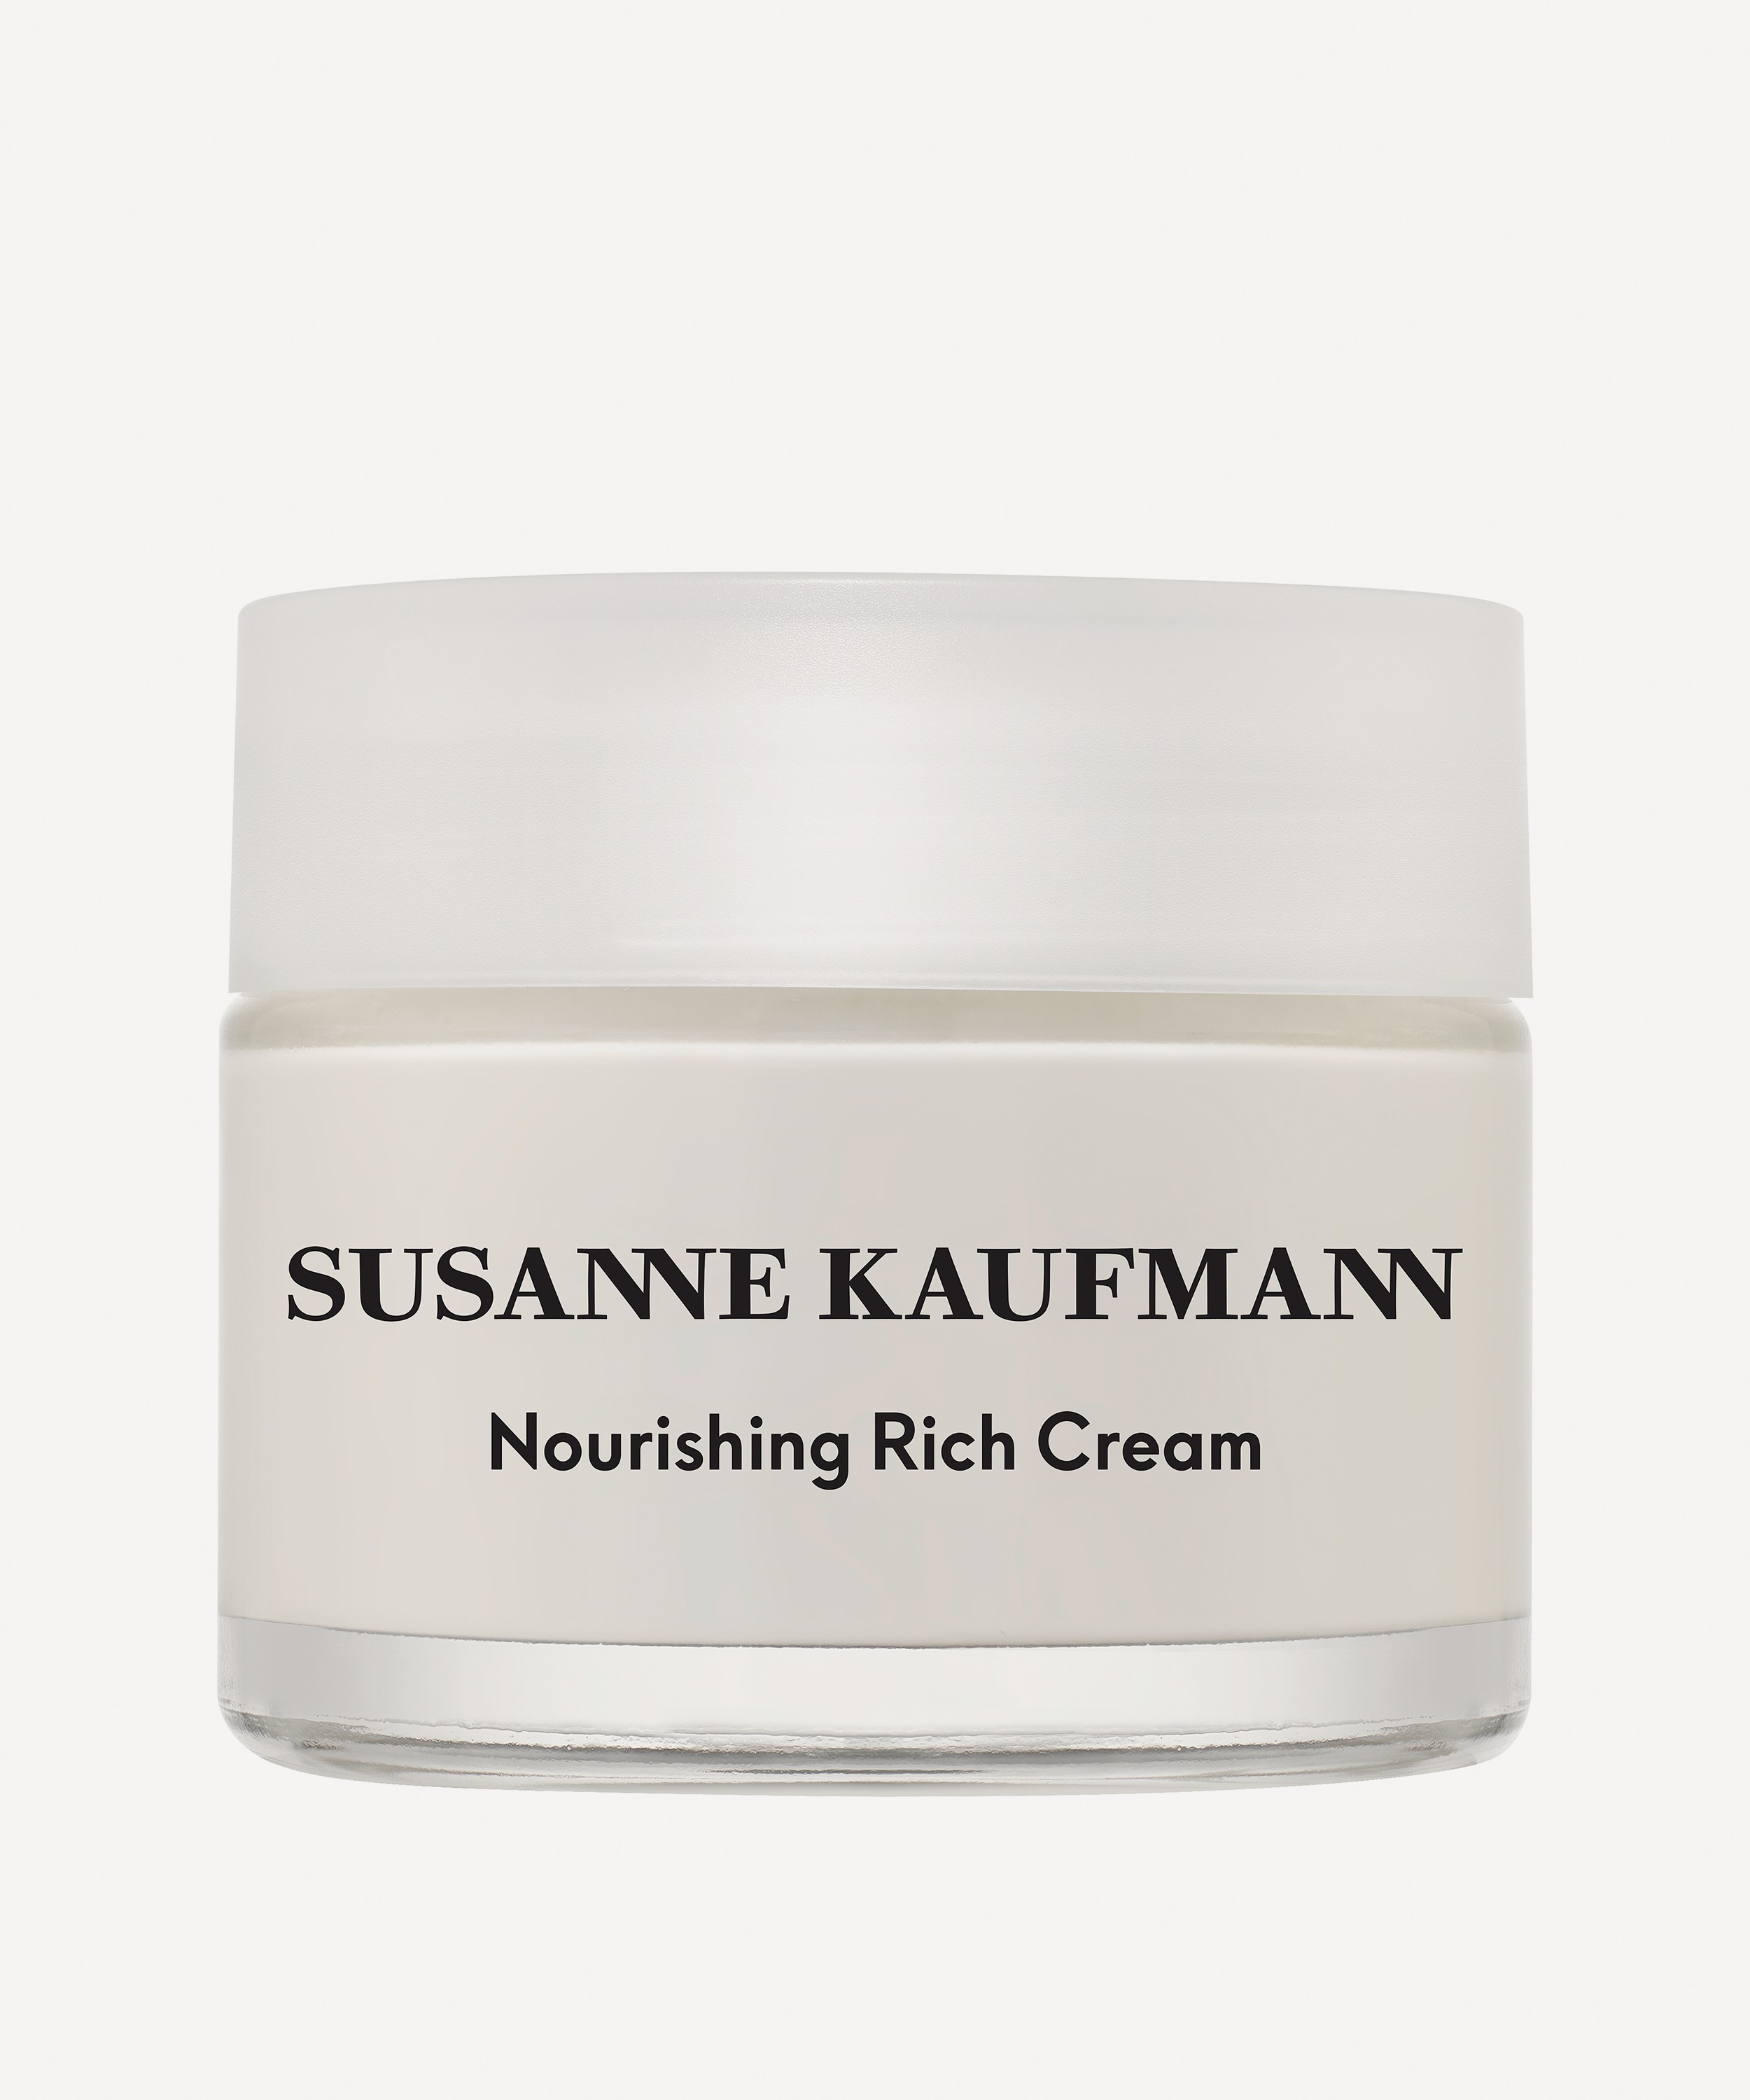 Susanne Kaufmann - Nourishing Rich Cream 50ml